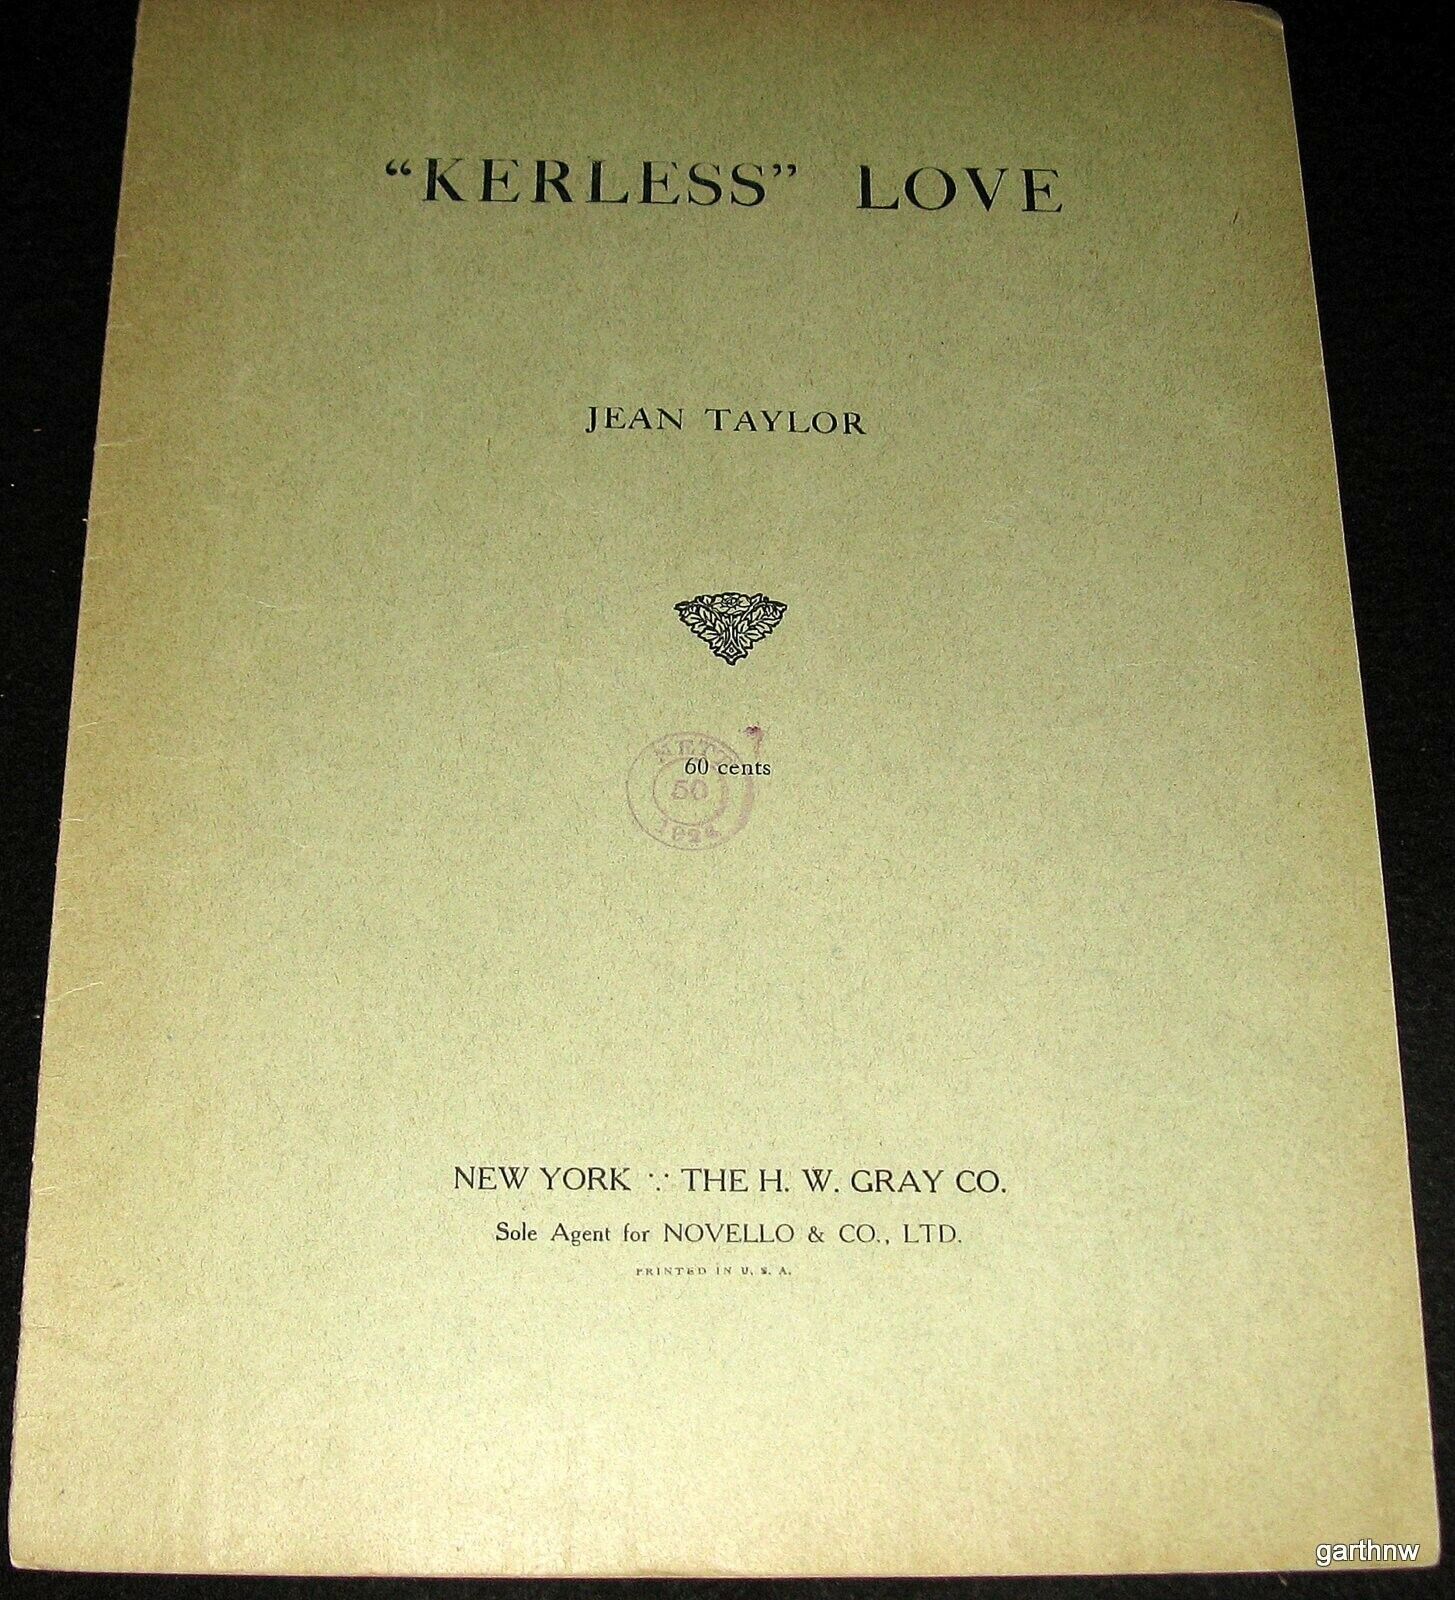 KERLESS LOVE (CARELESS) 1923 SONG MUSIC SHEET BLACK HISTORY JEAN TAYLOR